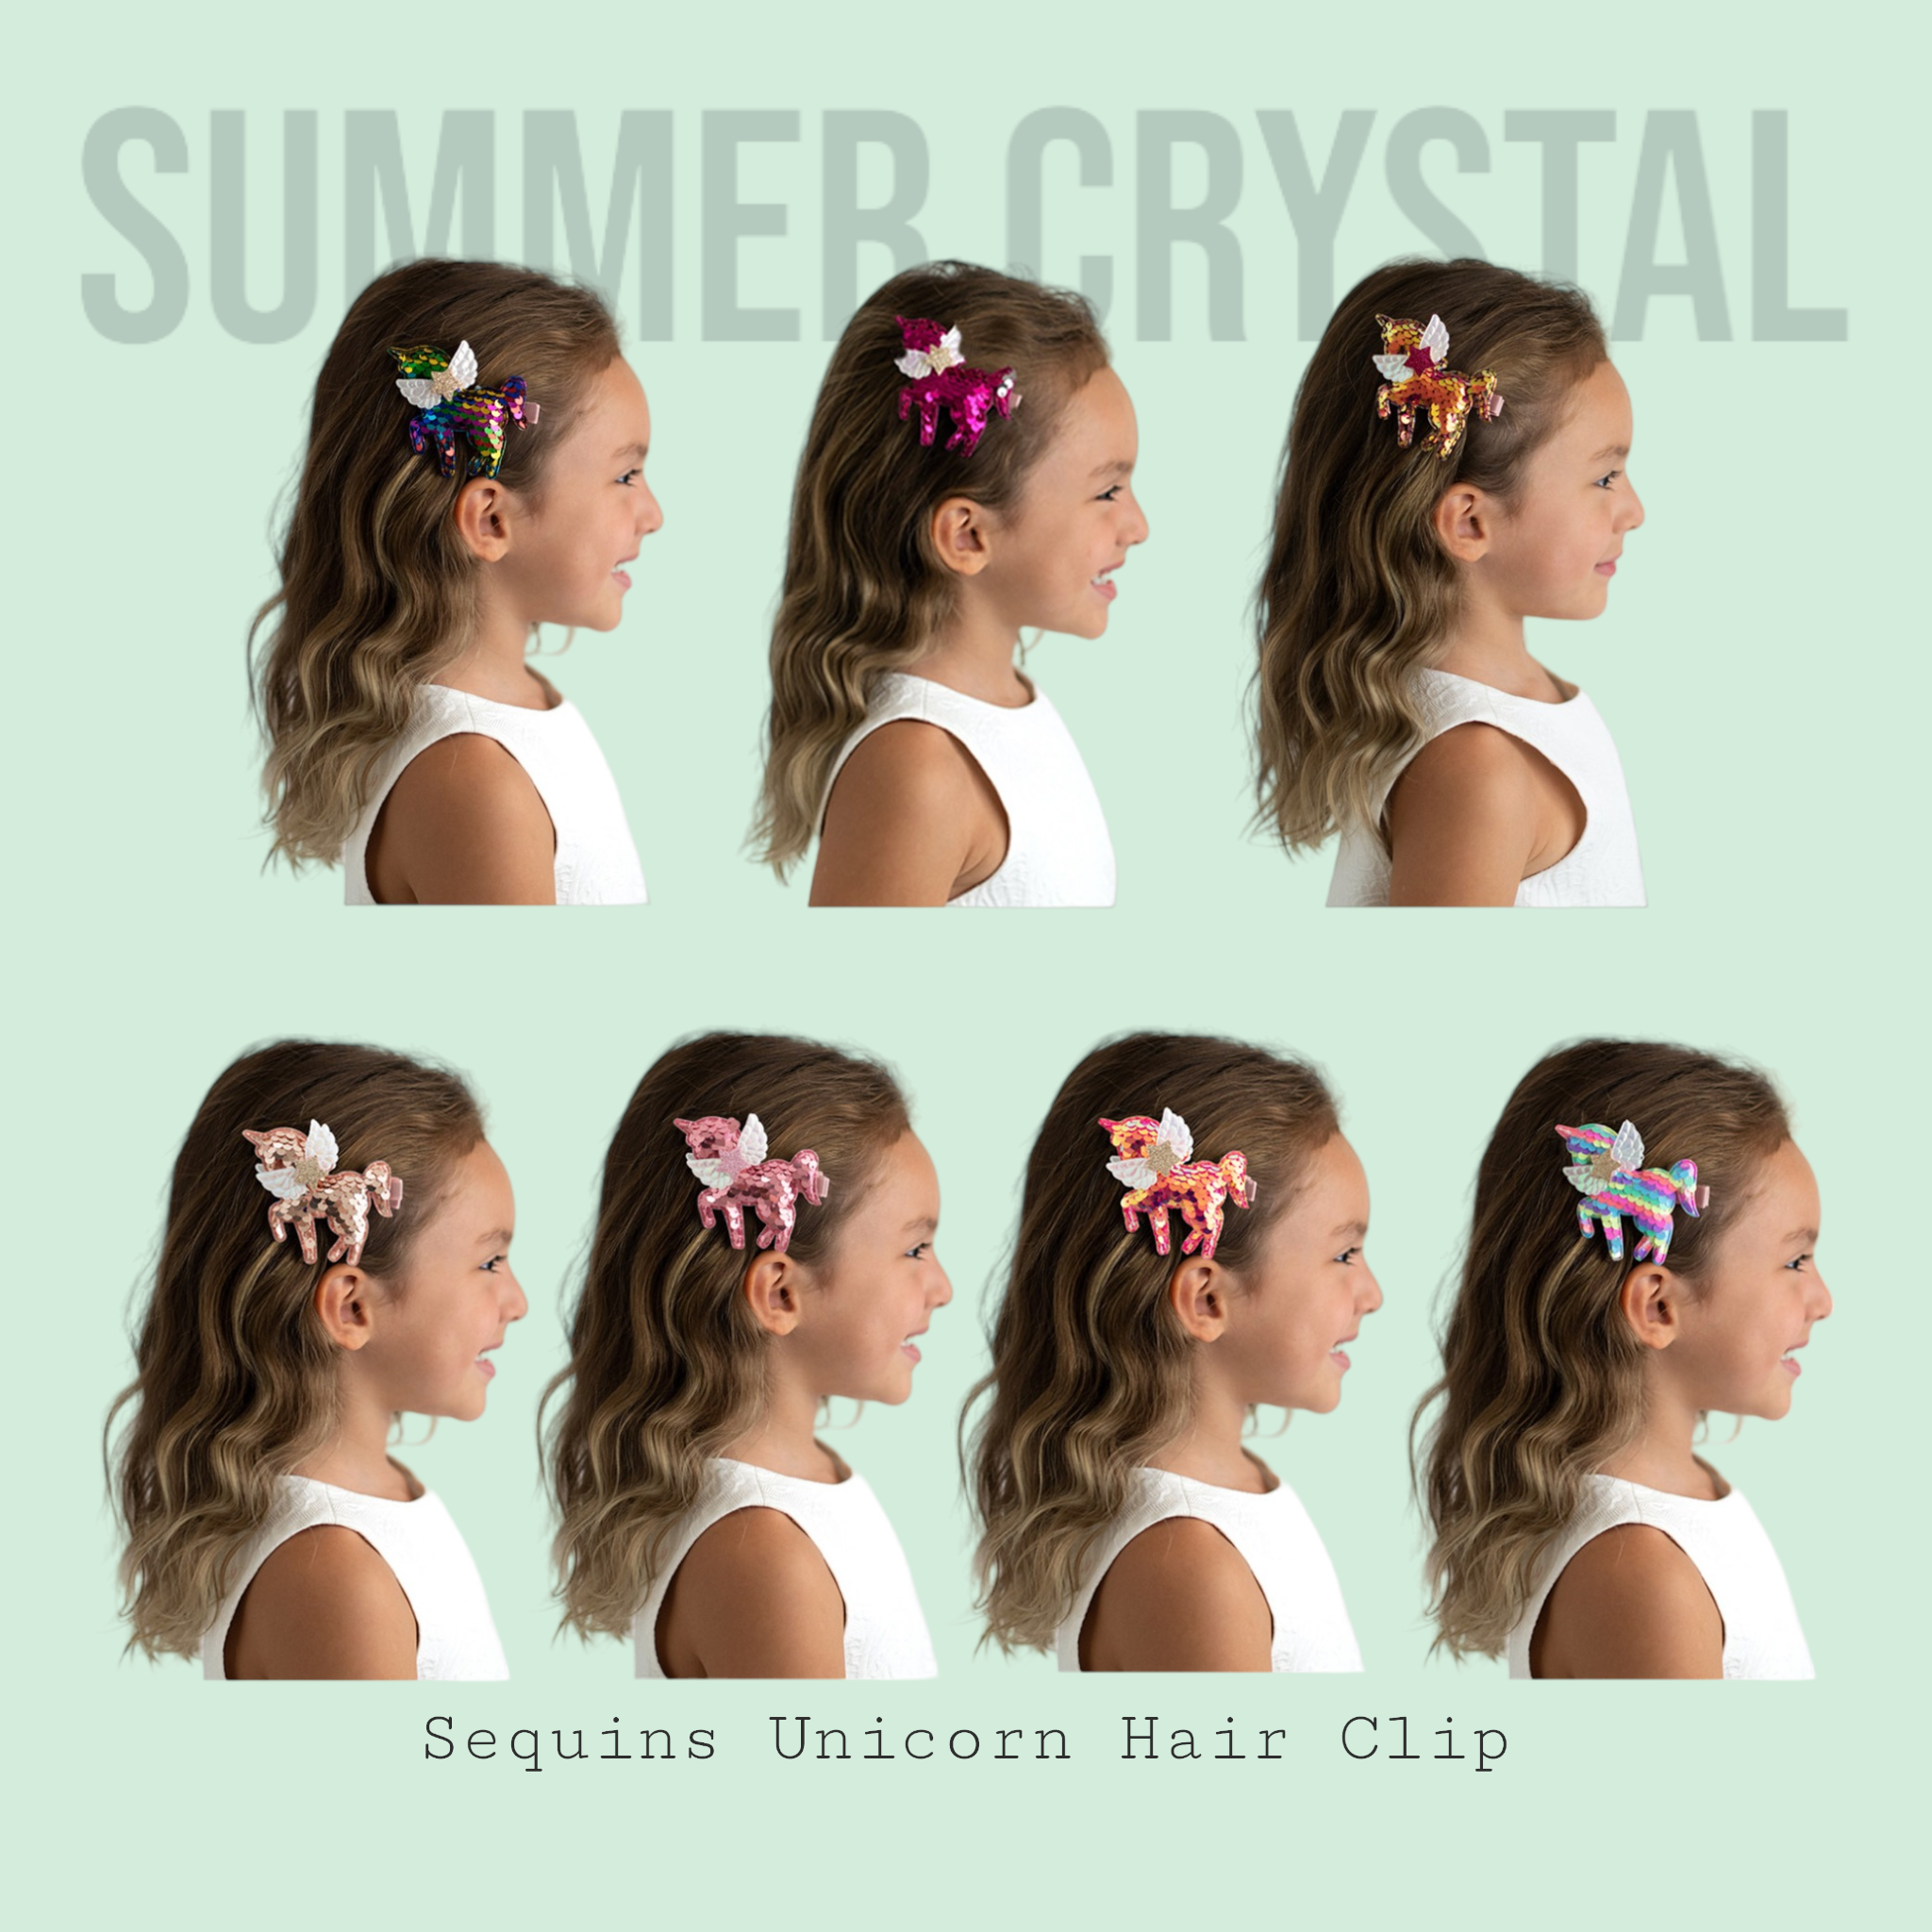 Summer Crystal Sequins Unicorn Alligator Hair Clip 2.75 x 3.25 Inch